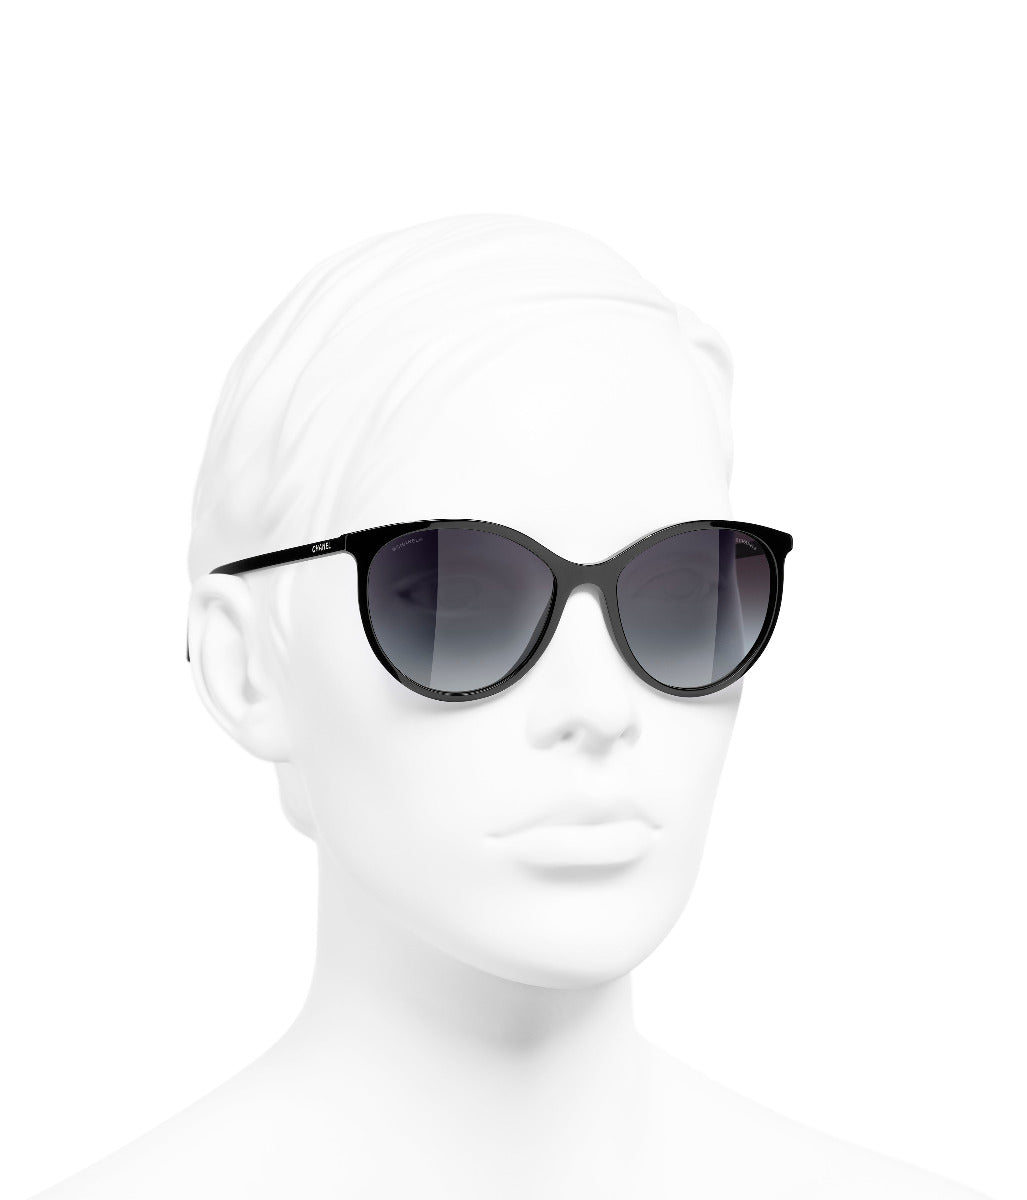 Chanel 5508 Sunglasses (Red/Grey - Aviator - Women)